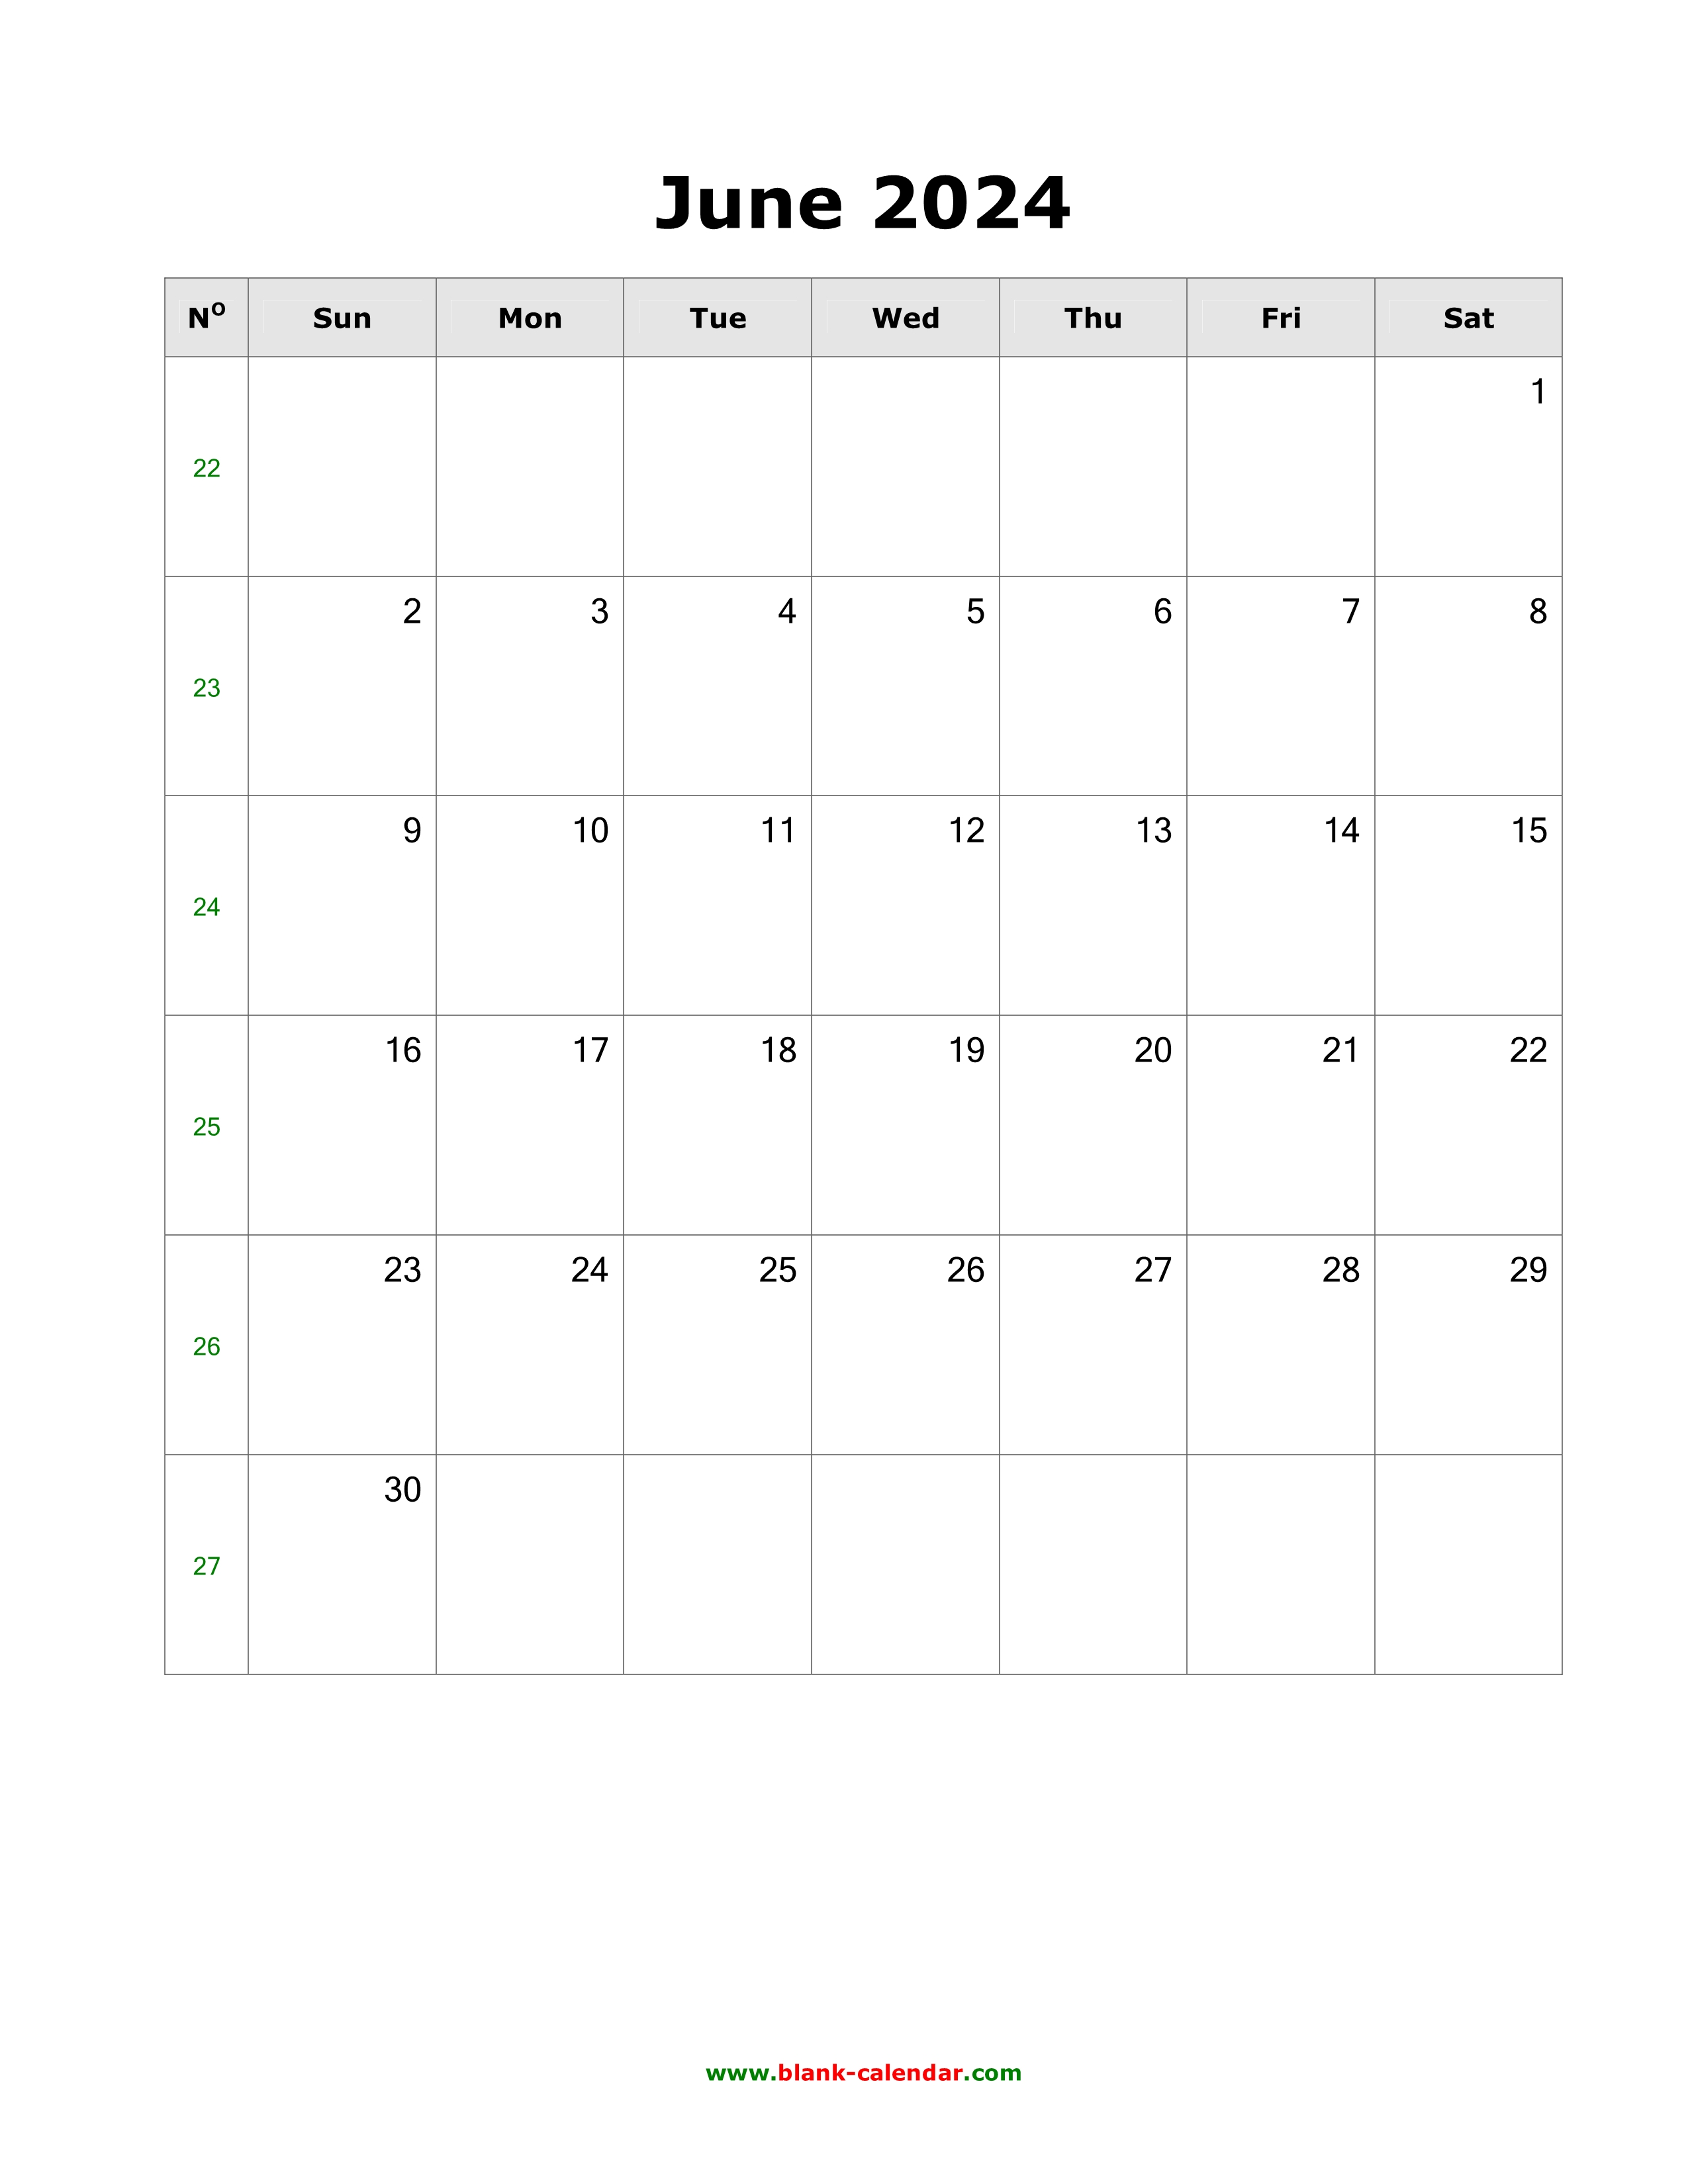 Download June 2024 Blank Calendar (vertical)